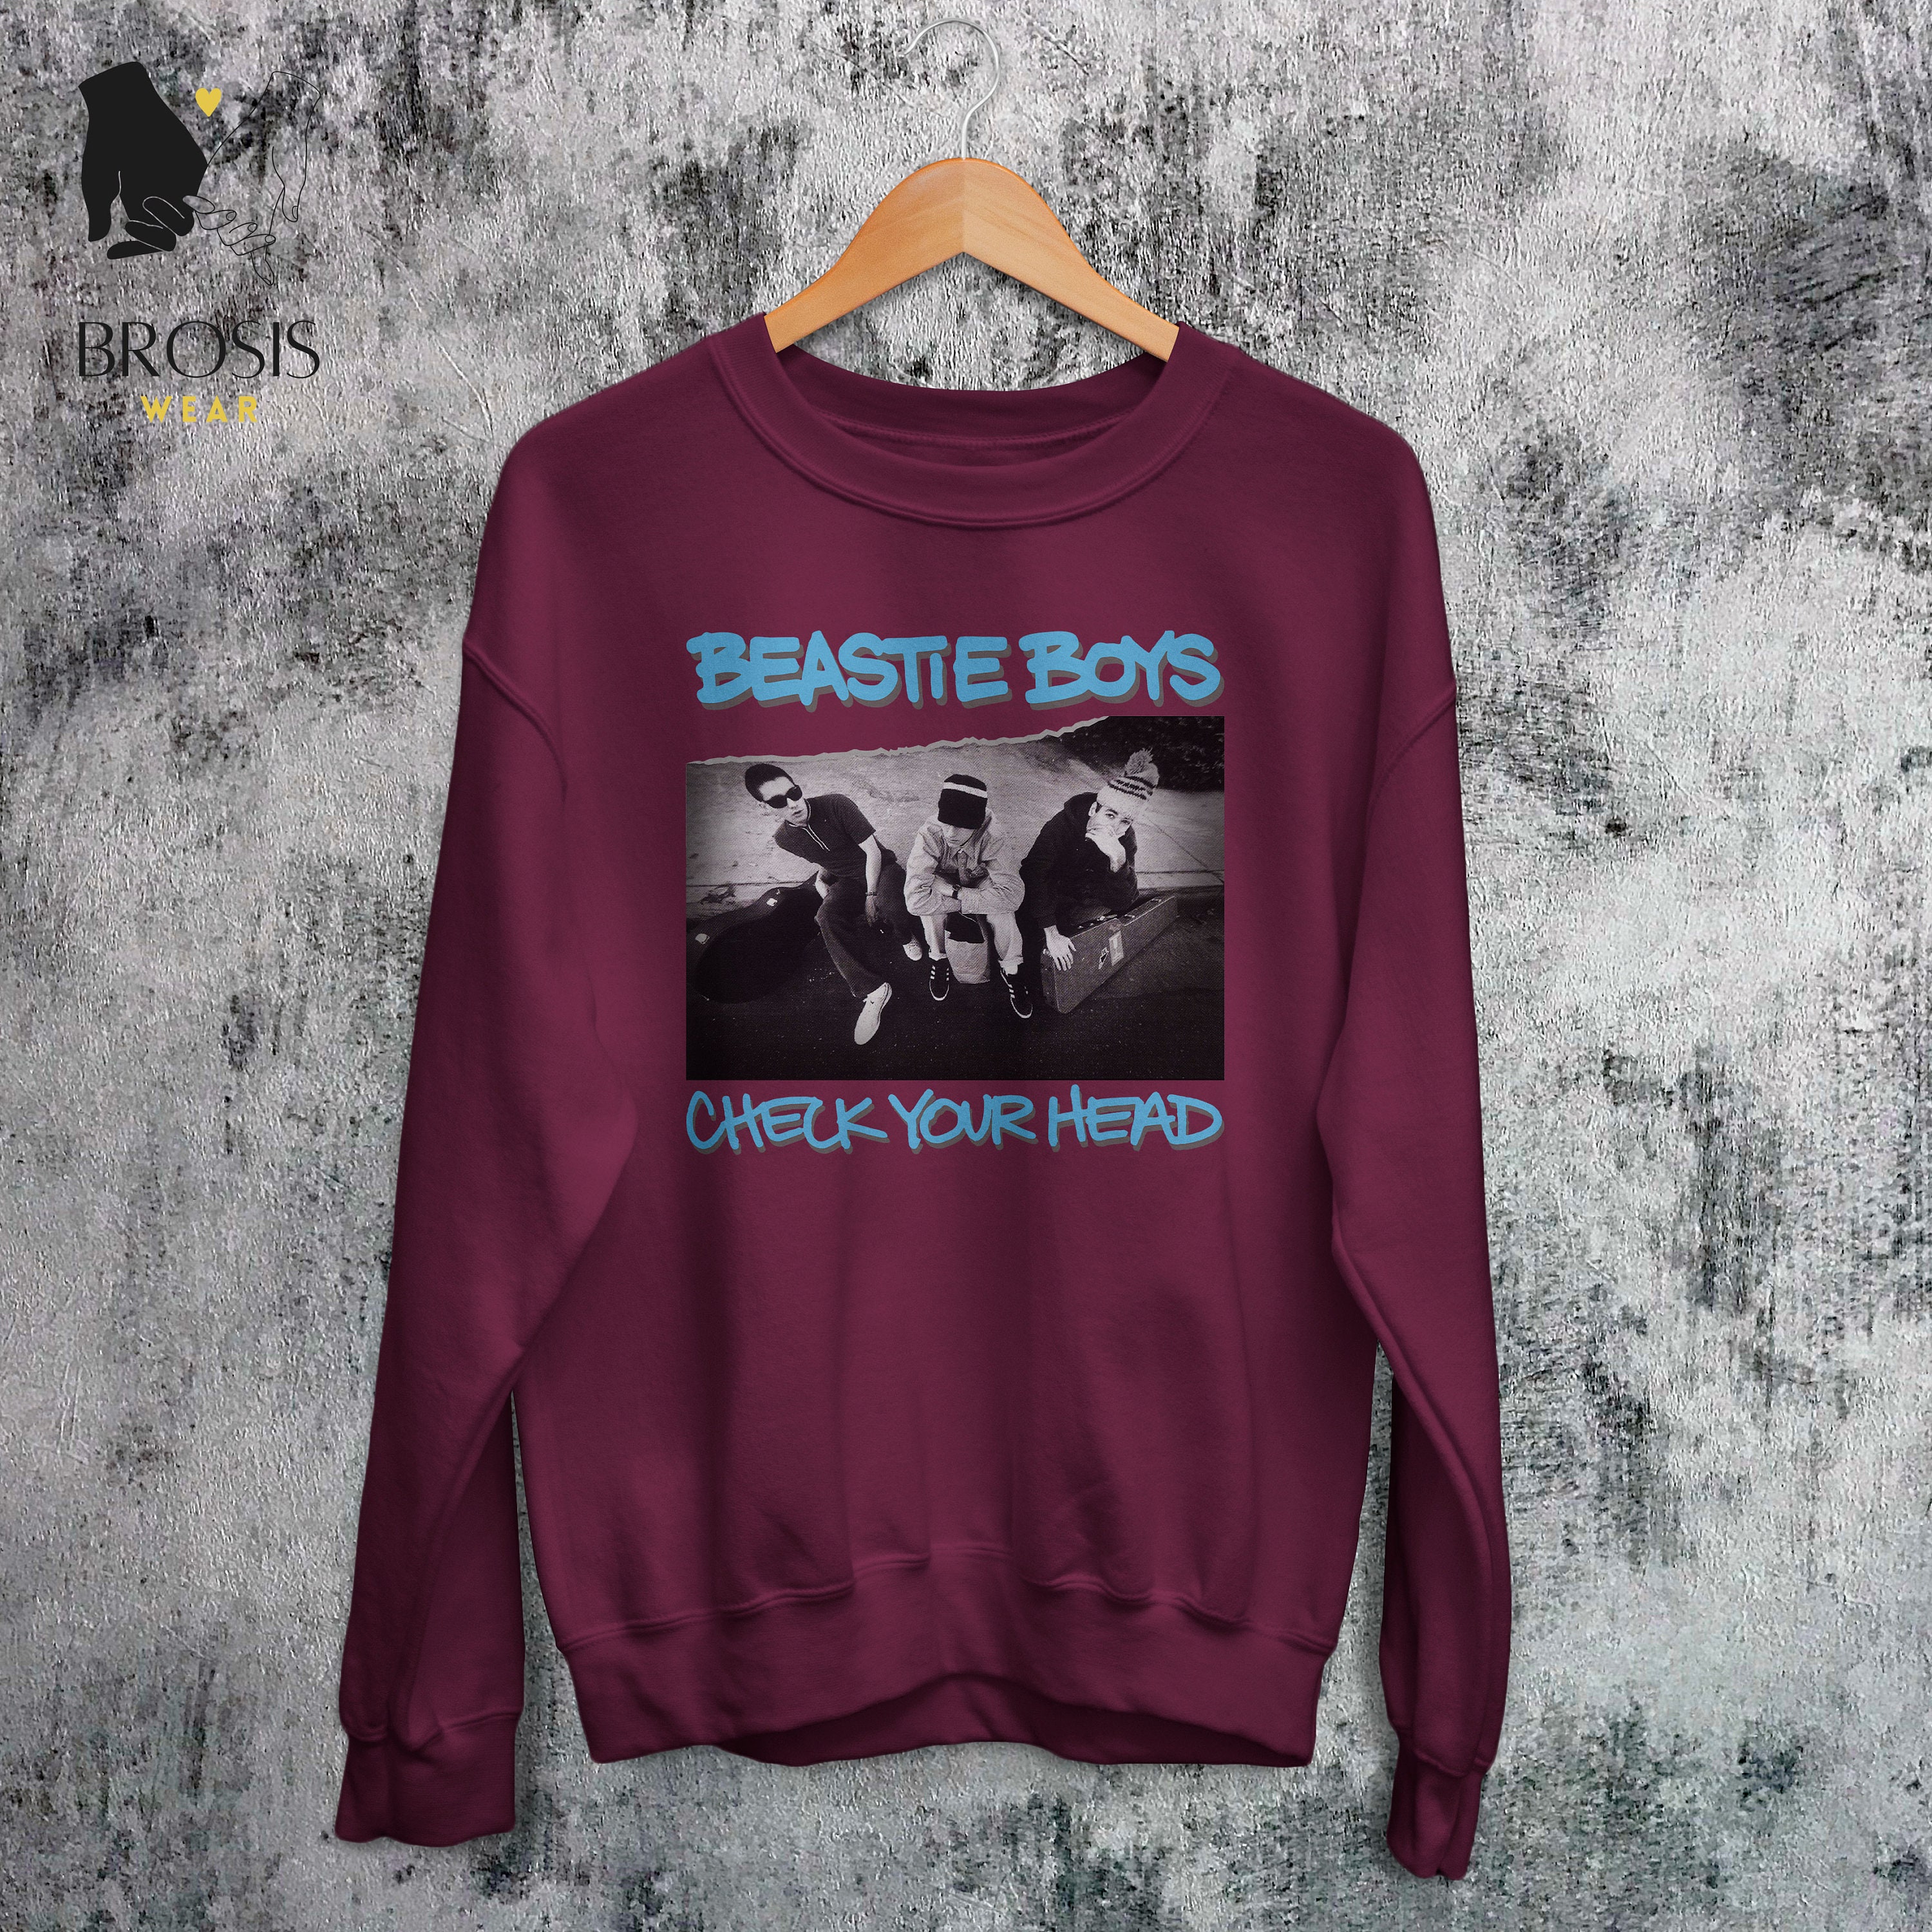 Check Your Head Sweatshirt, Beastie Boys Sweatshirt, Hip Hop Group,  Inspired 90's Graphic Shirt, Music Merch, Gifts for Fan -  Canada